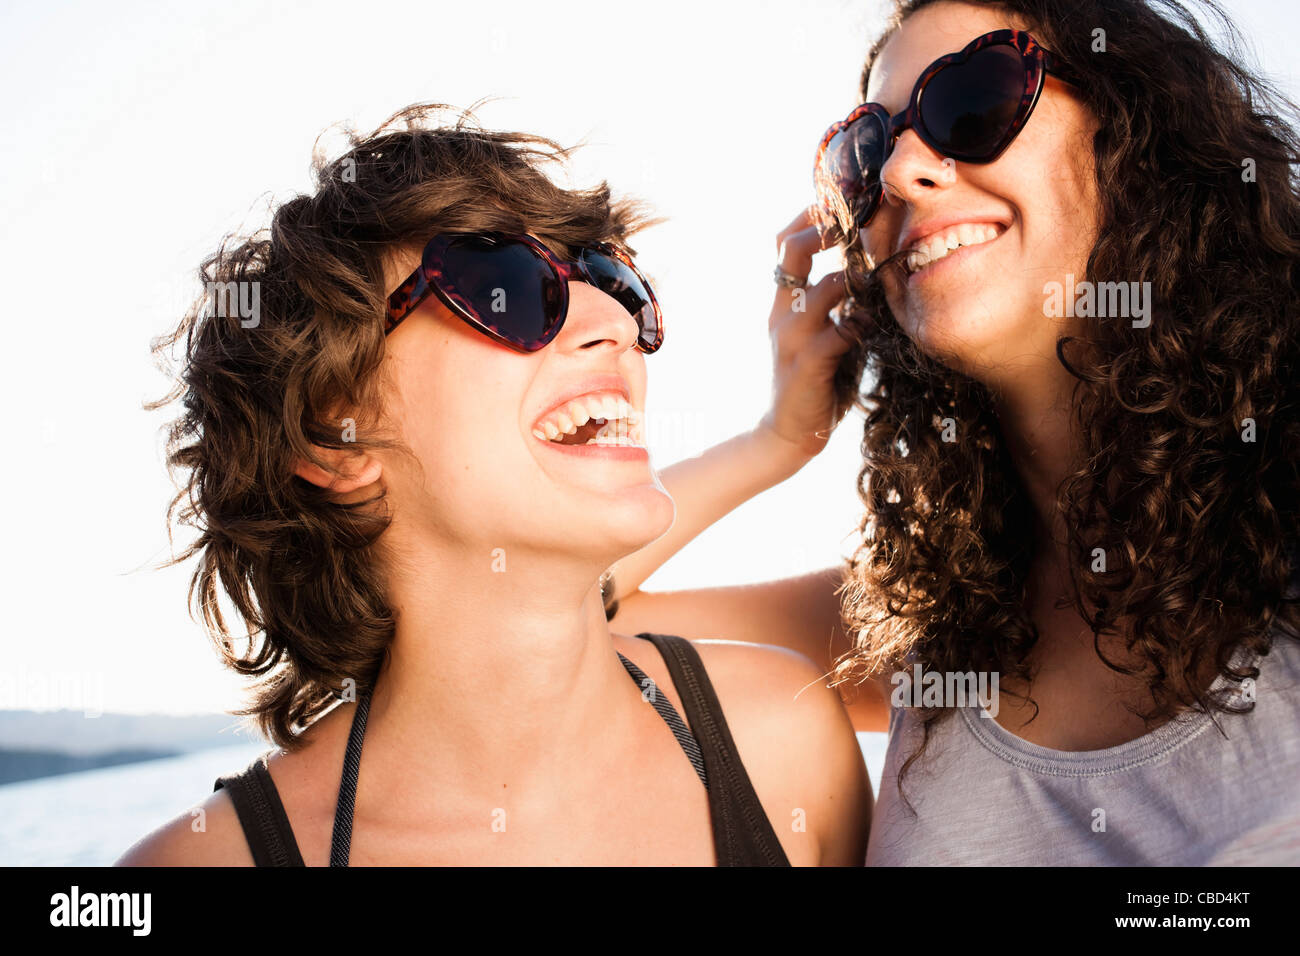 Laughing women in sunglasses on beach Stock Photo